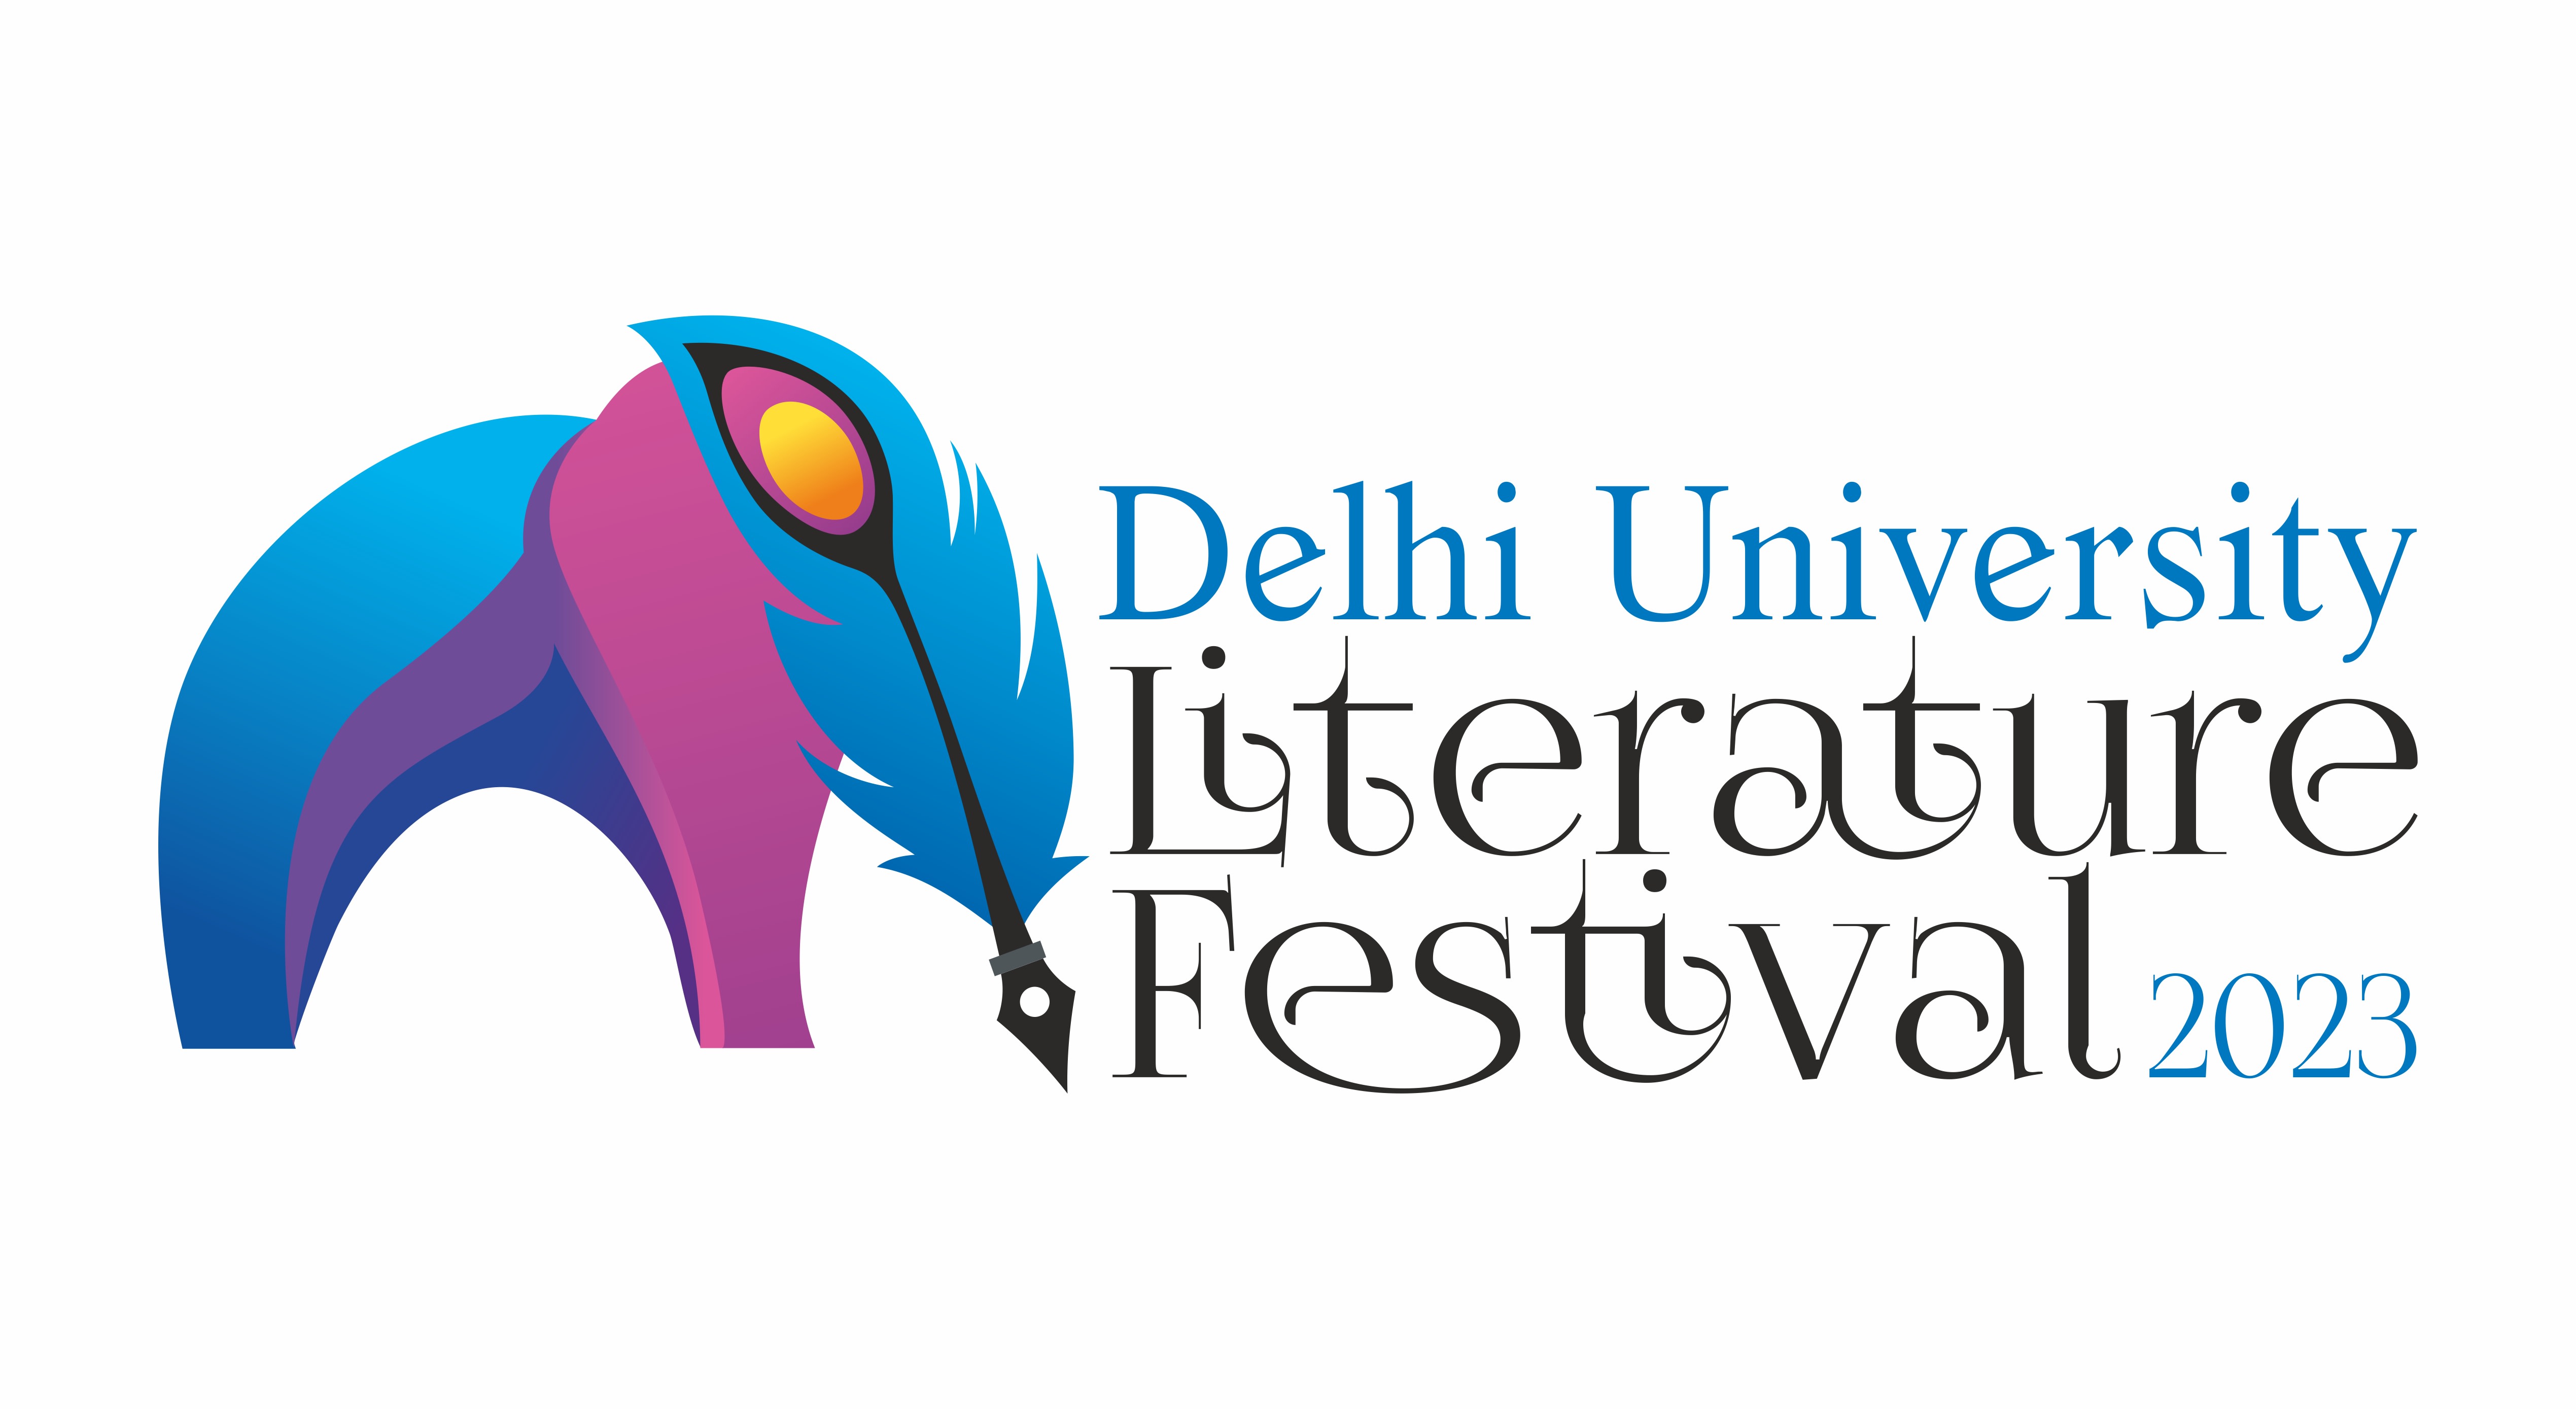 Delhi University Literature Festival 2023